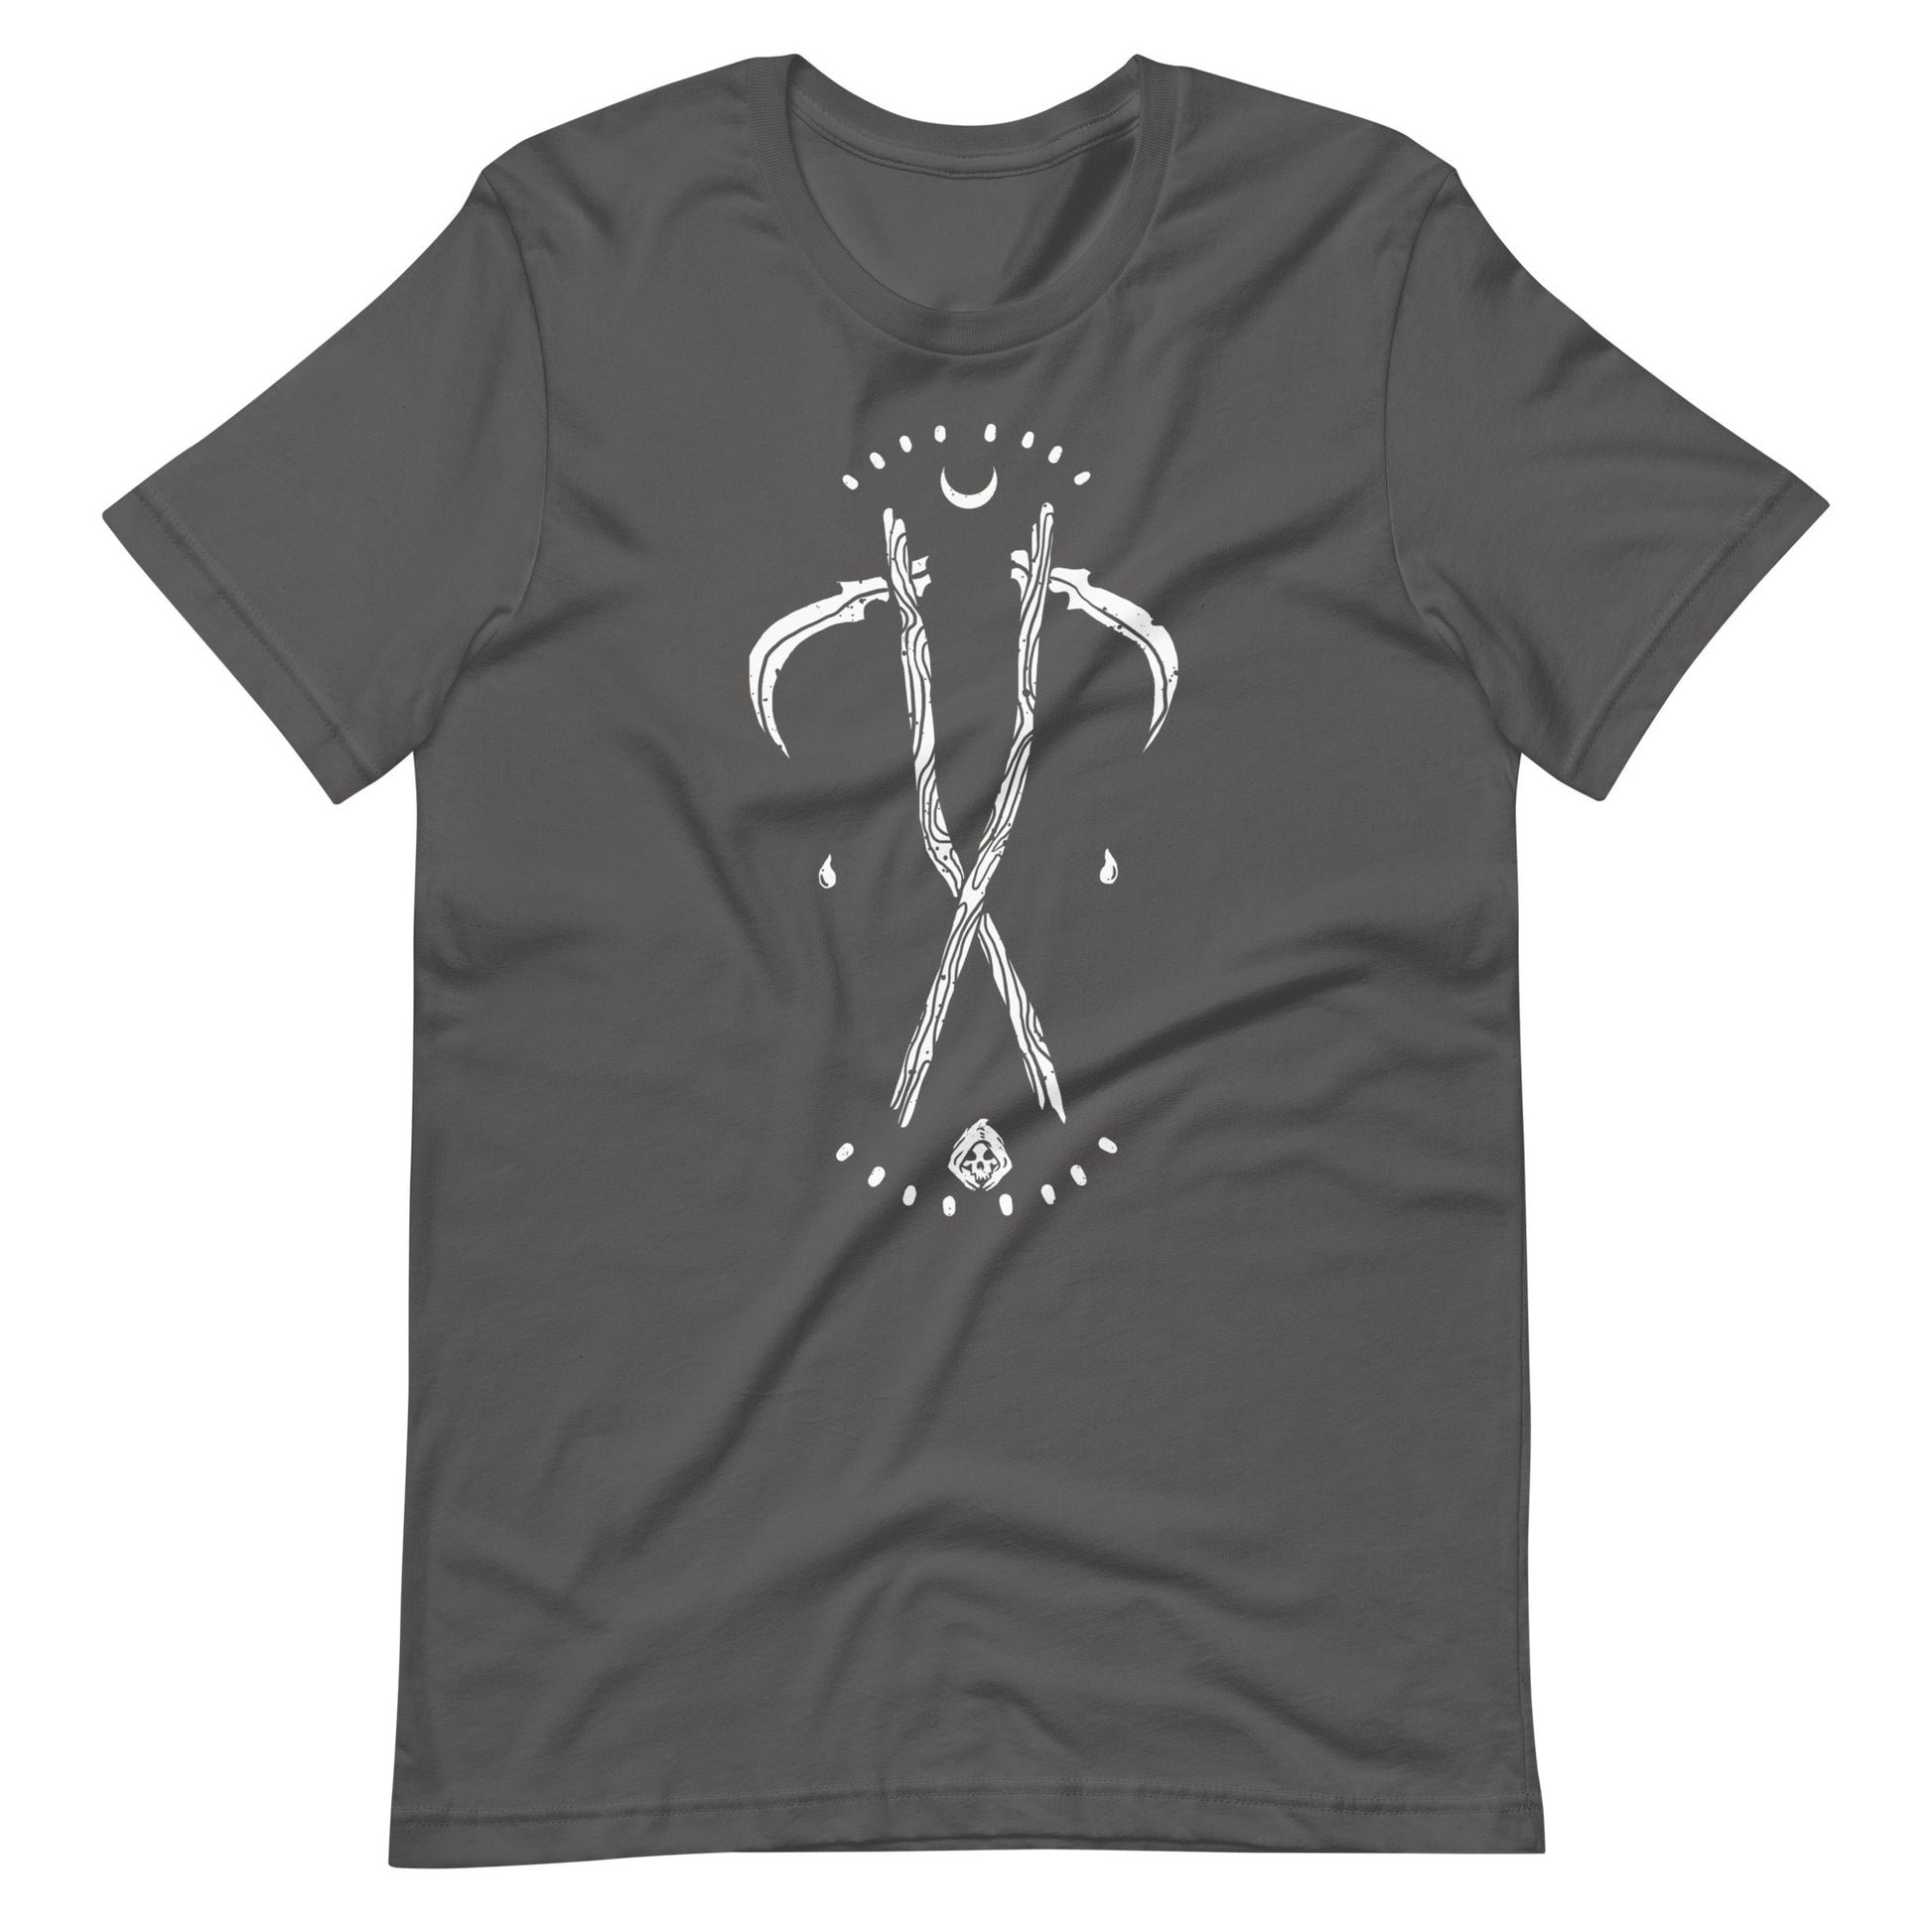 Grim - Men's t-shirt - Asphalt Front